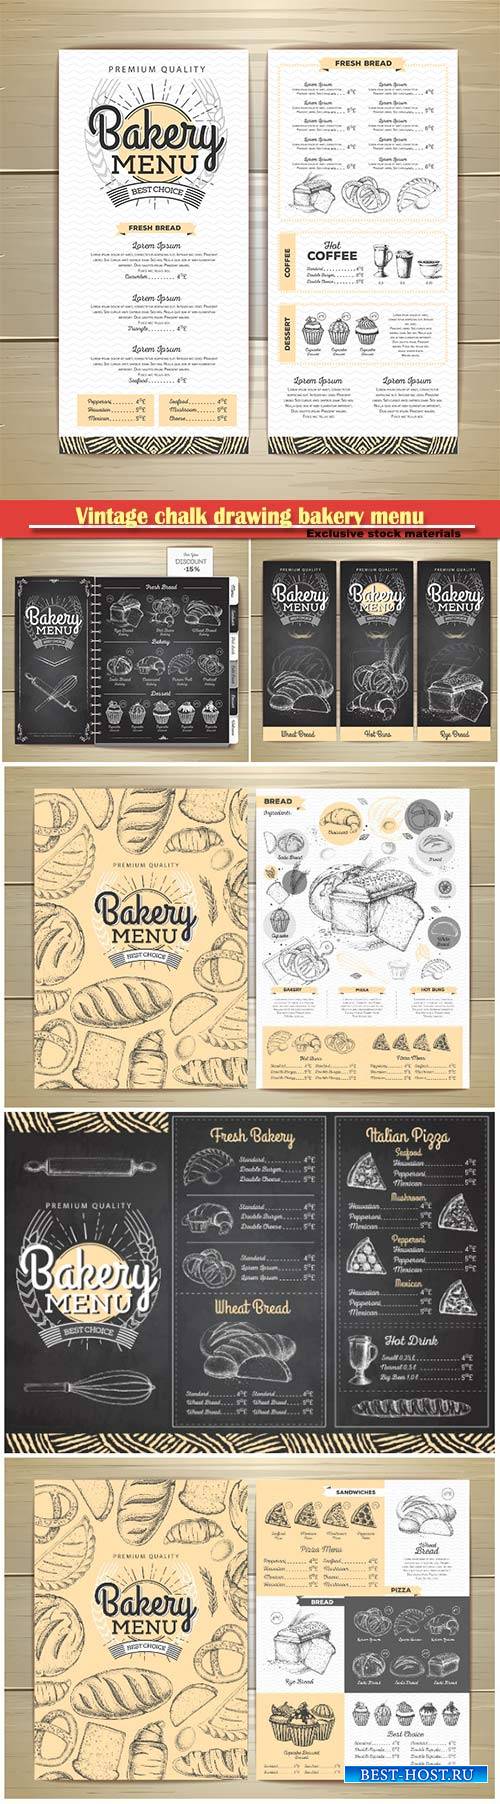 Vintage chalk drawing bakery menu design, restaurant menu